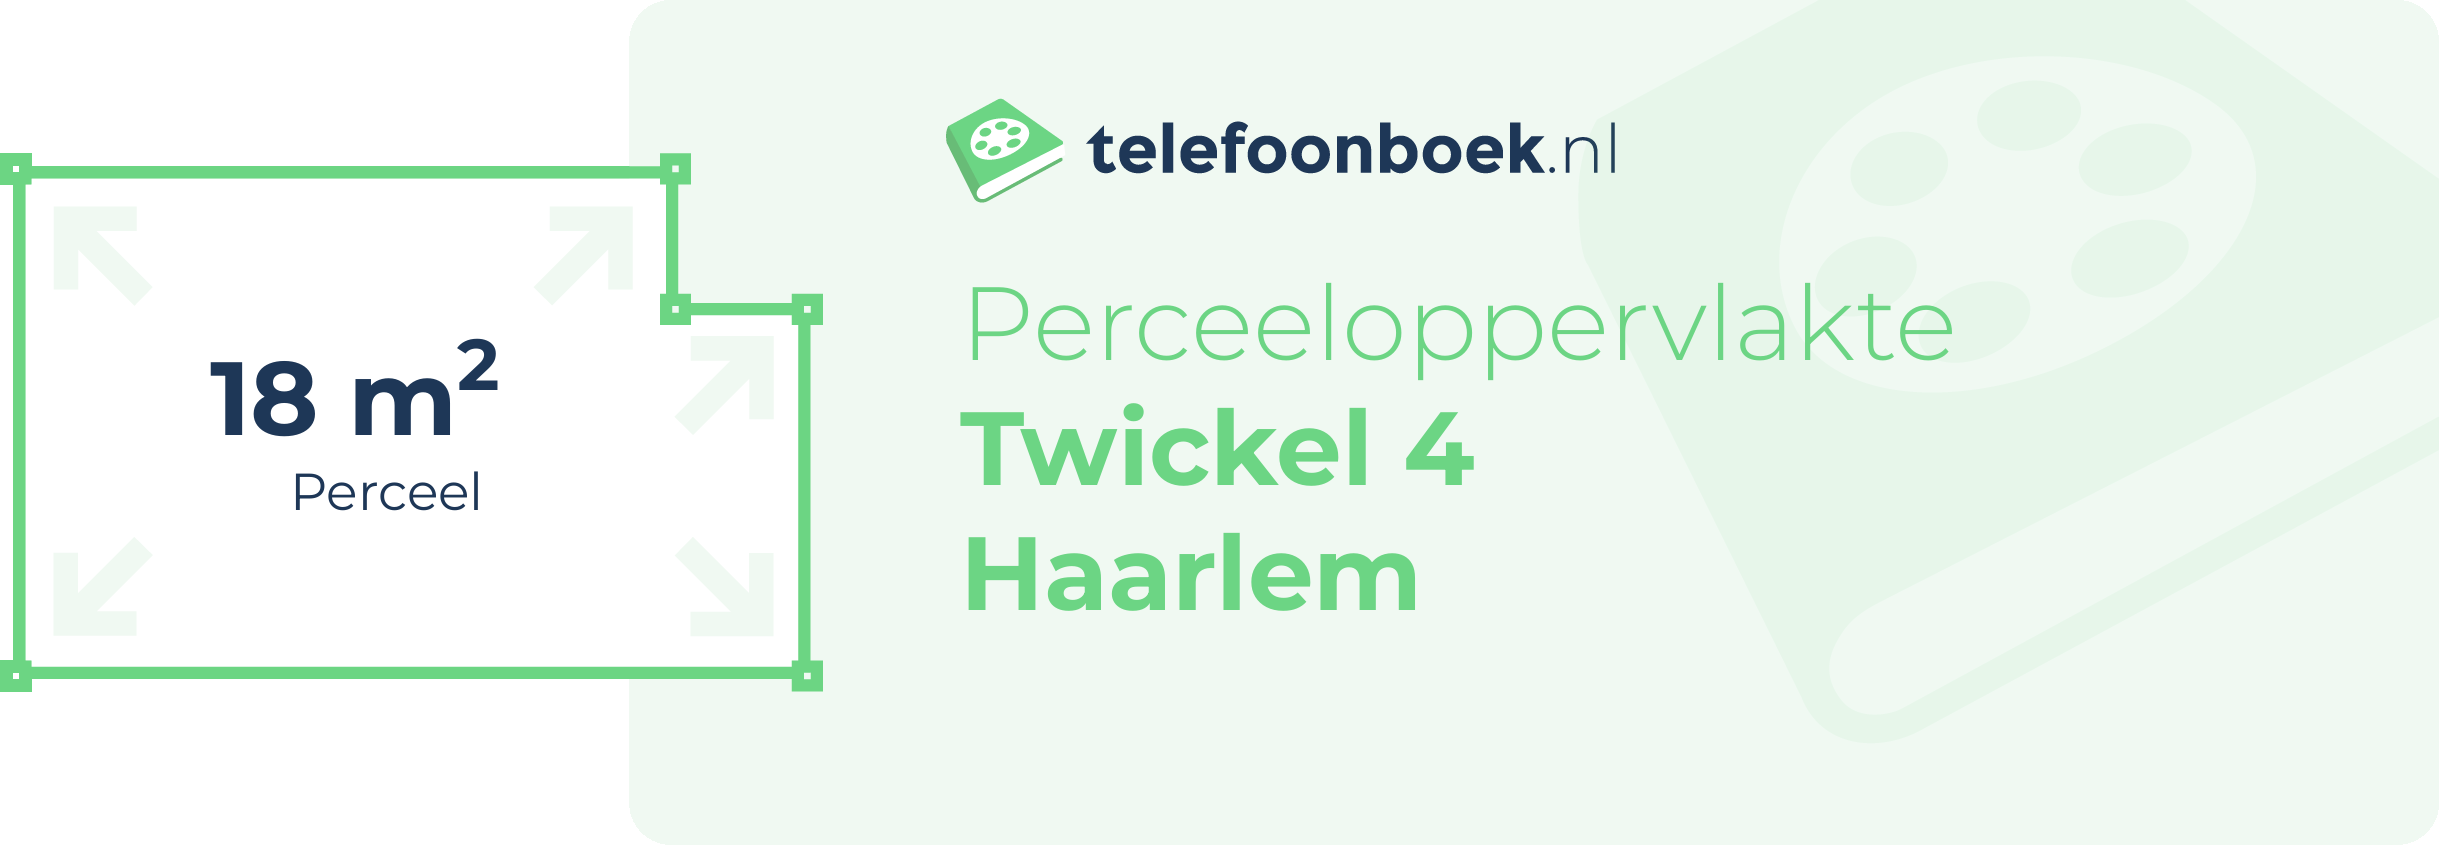 Perceeloppervlakte Twickel 4 Haarlem